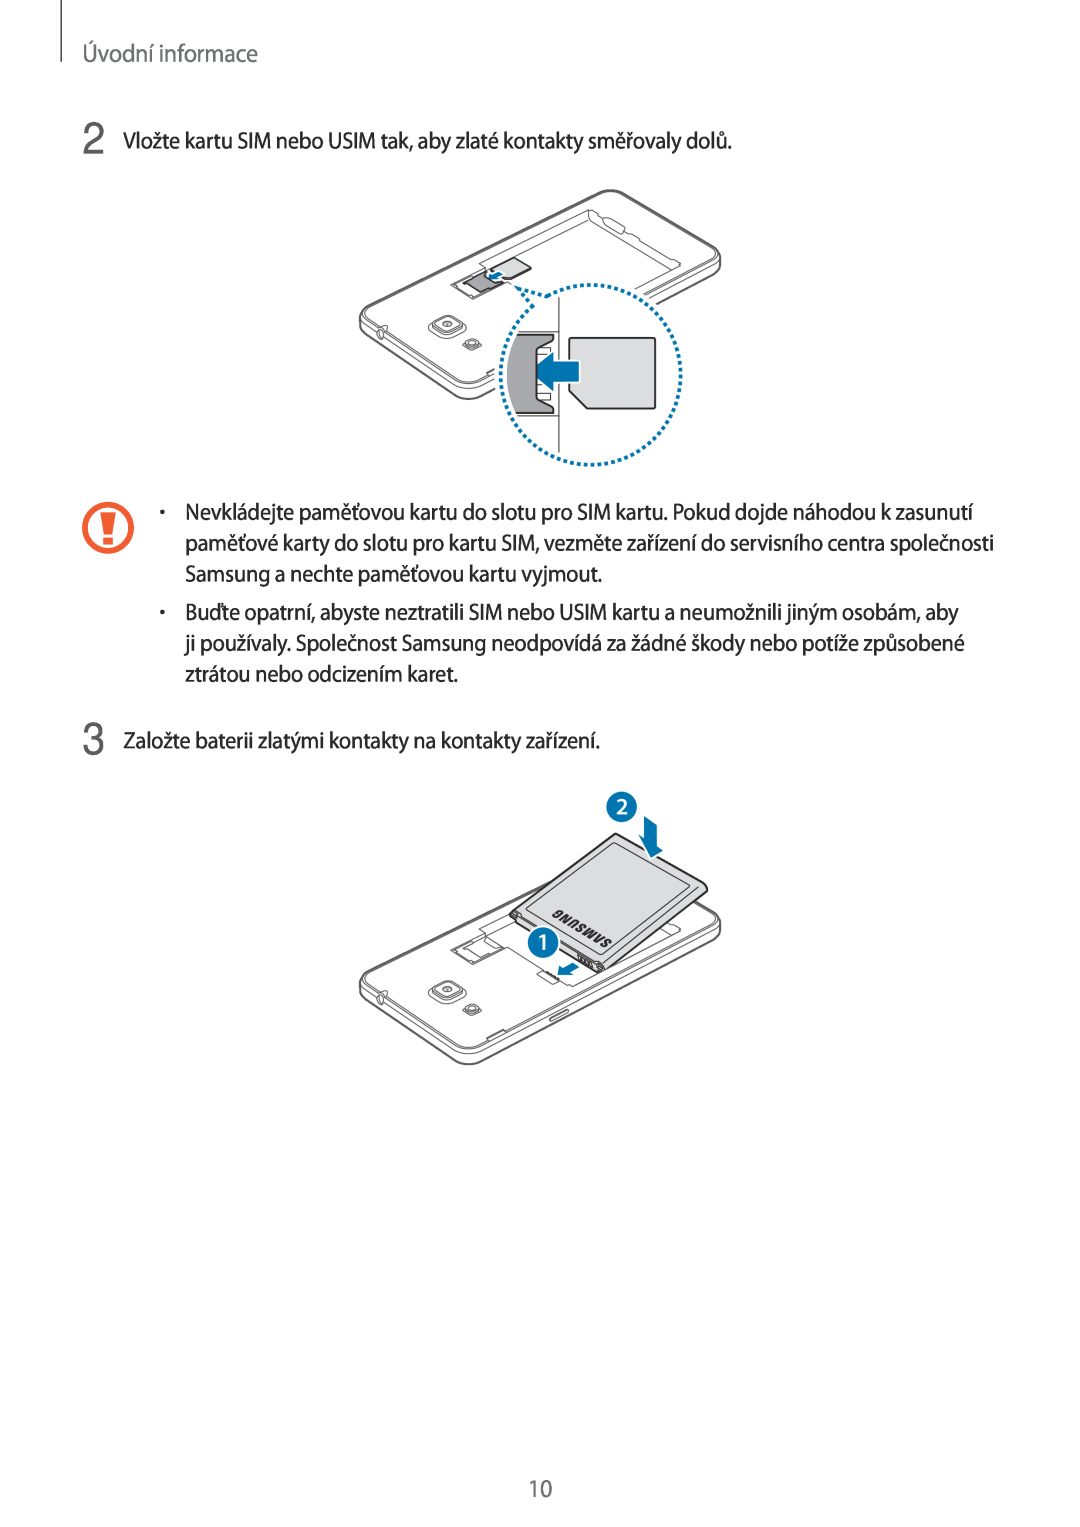 Samsung SM-G530FZWAETL manual Úvodní informace, 2 Vložte kartu SIM nebo USIM tak, aby zlaté kontakty směřovaly dolů 